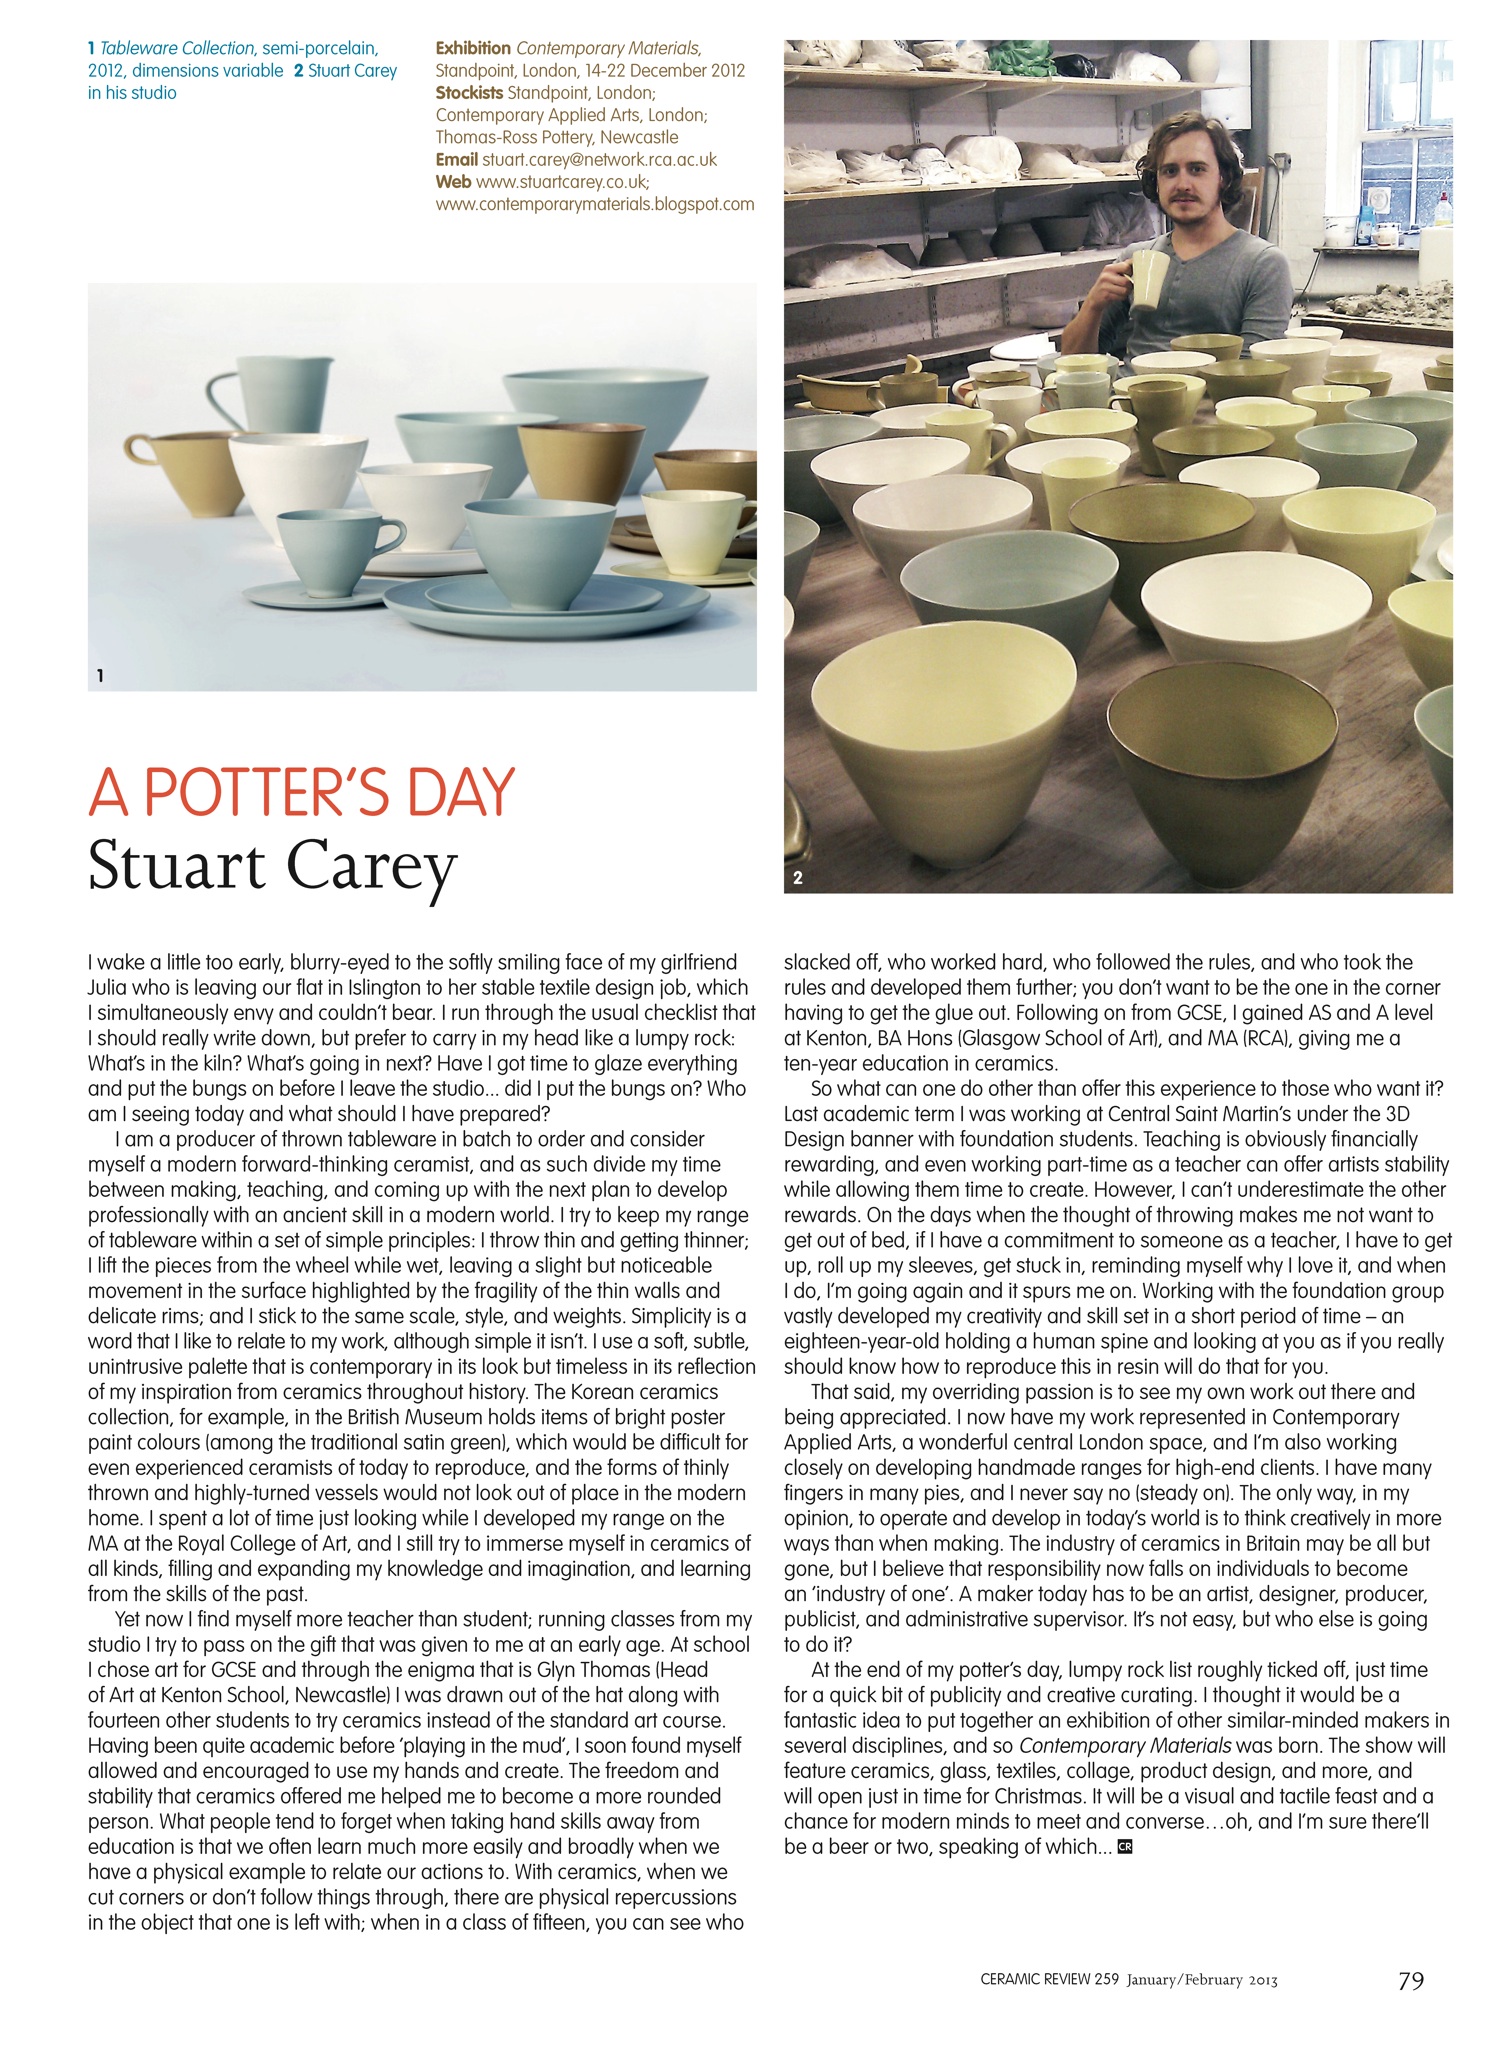 CR potters day jan:feb 13